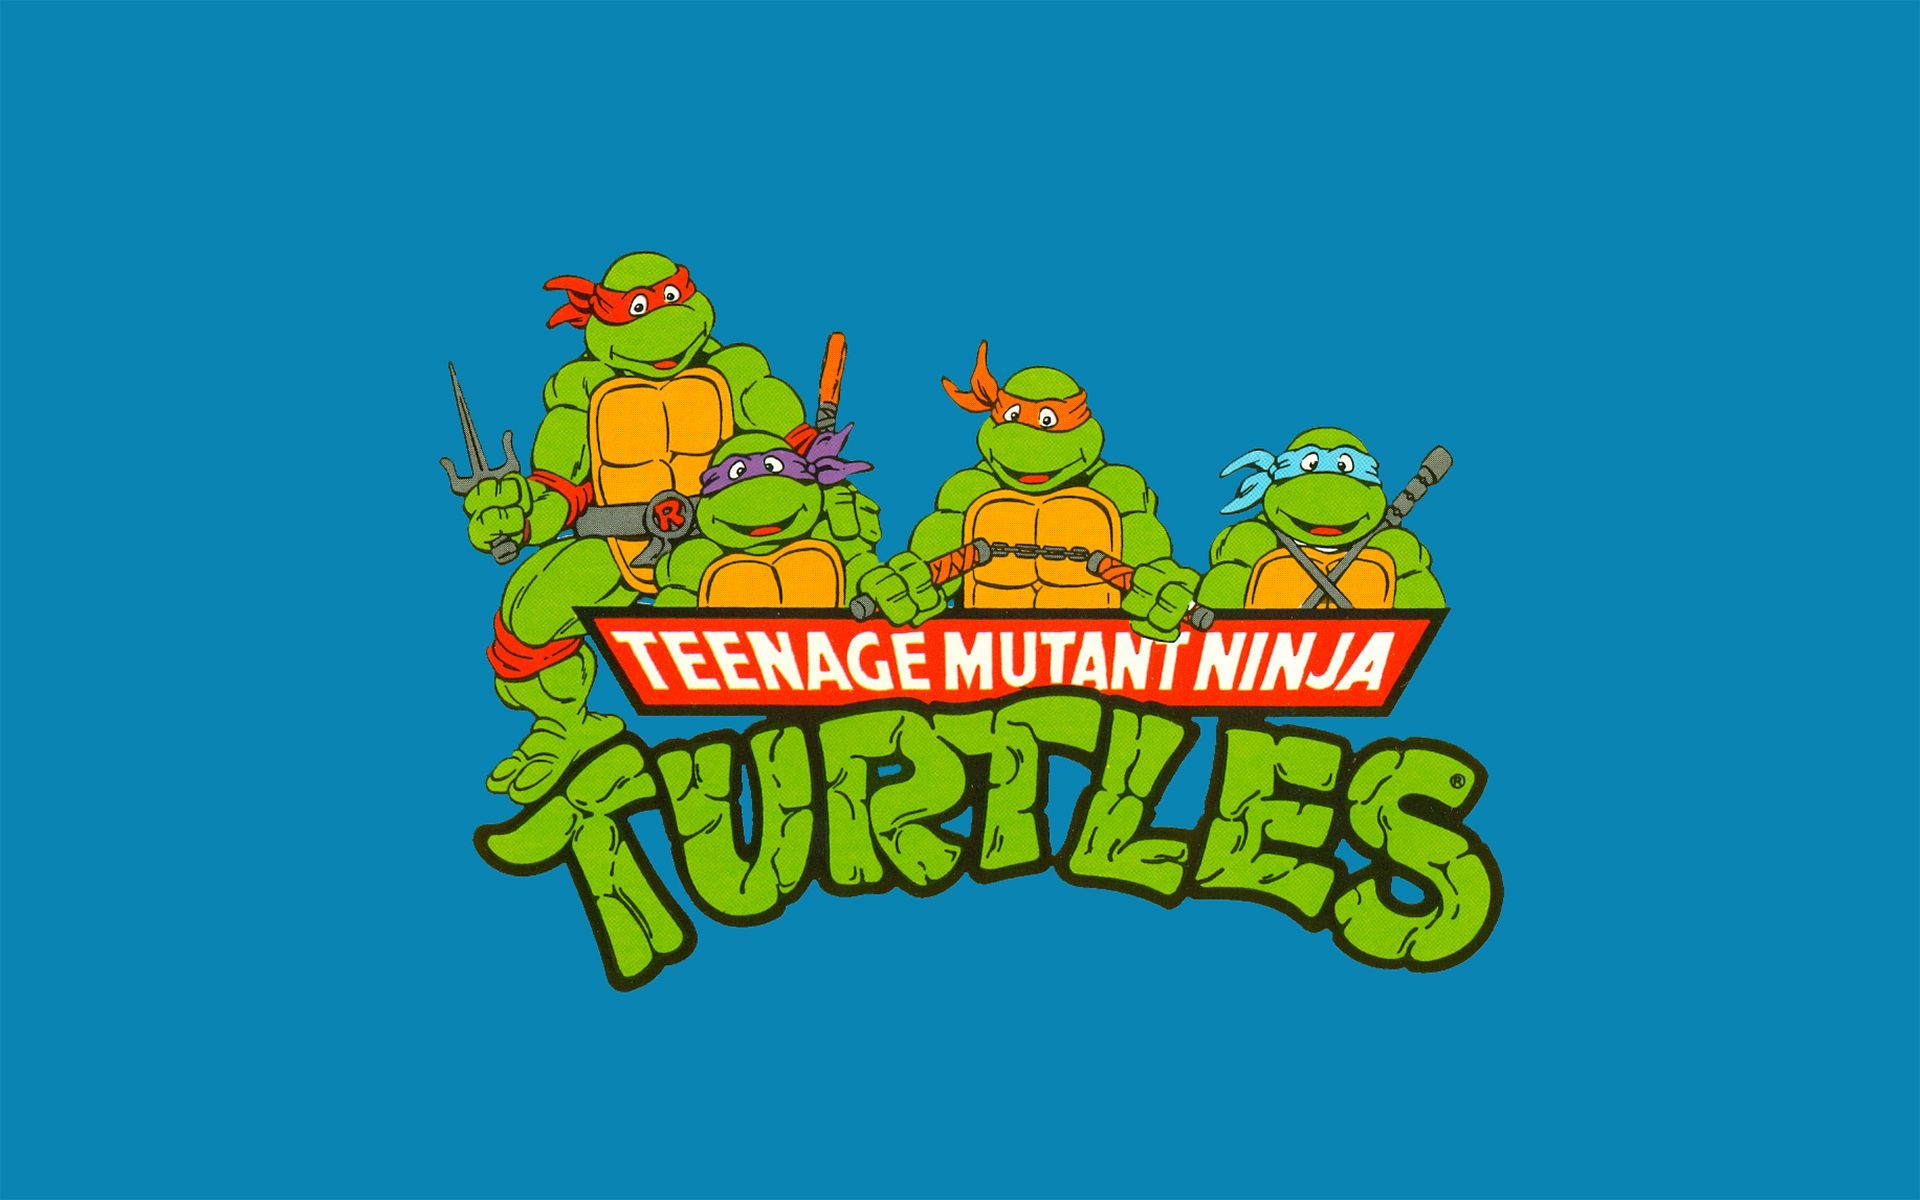 Teenage Mutant Ninja Turtles Logo wallpaper HD free. Tmnt, Tmnt wallpaper, Ninja turtles cartoon